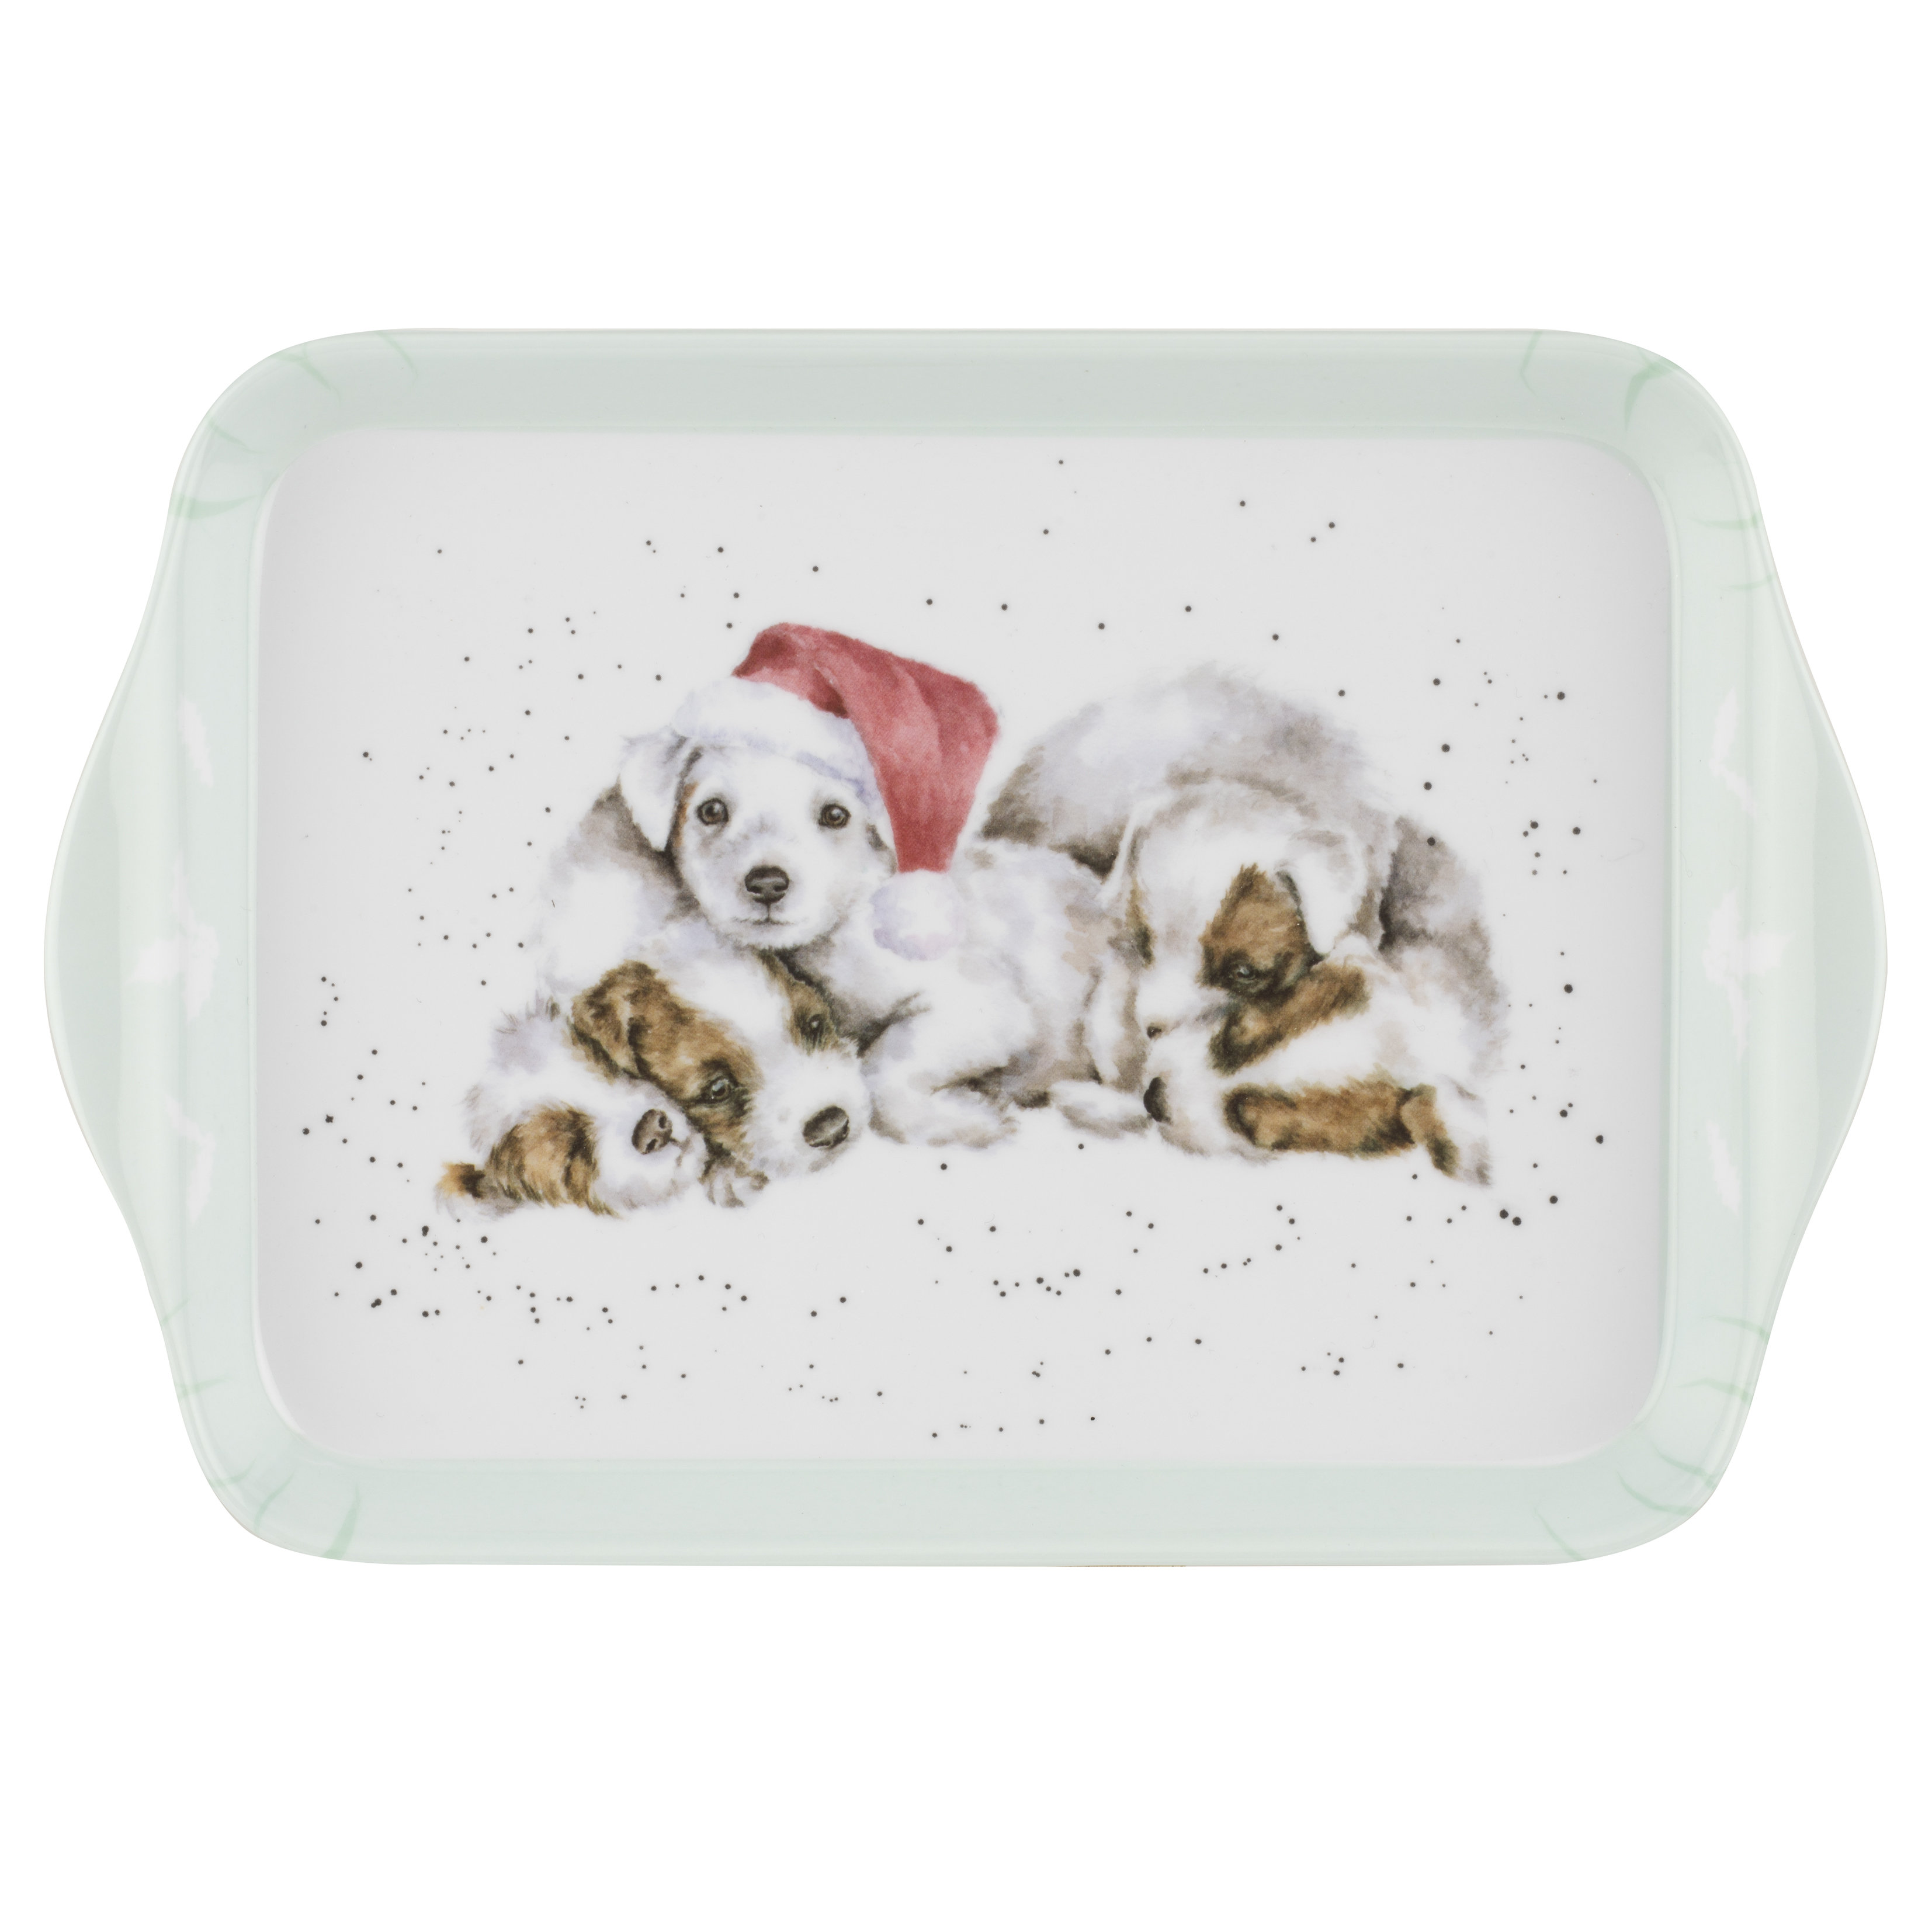 Santa Paws 3 Piece Mug & Tray Set (Dogs) image number null